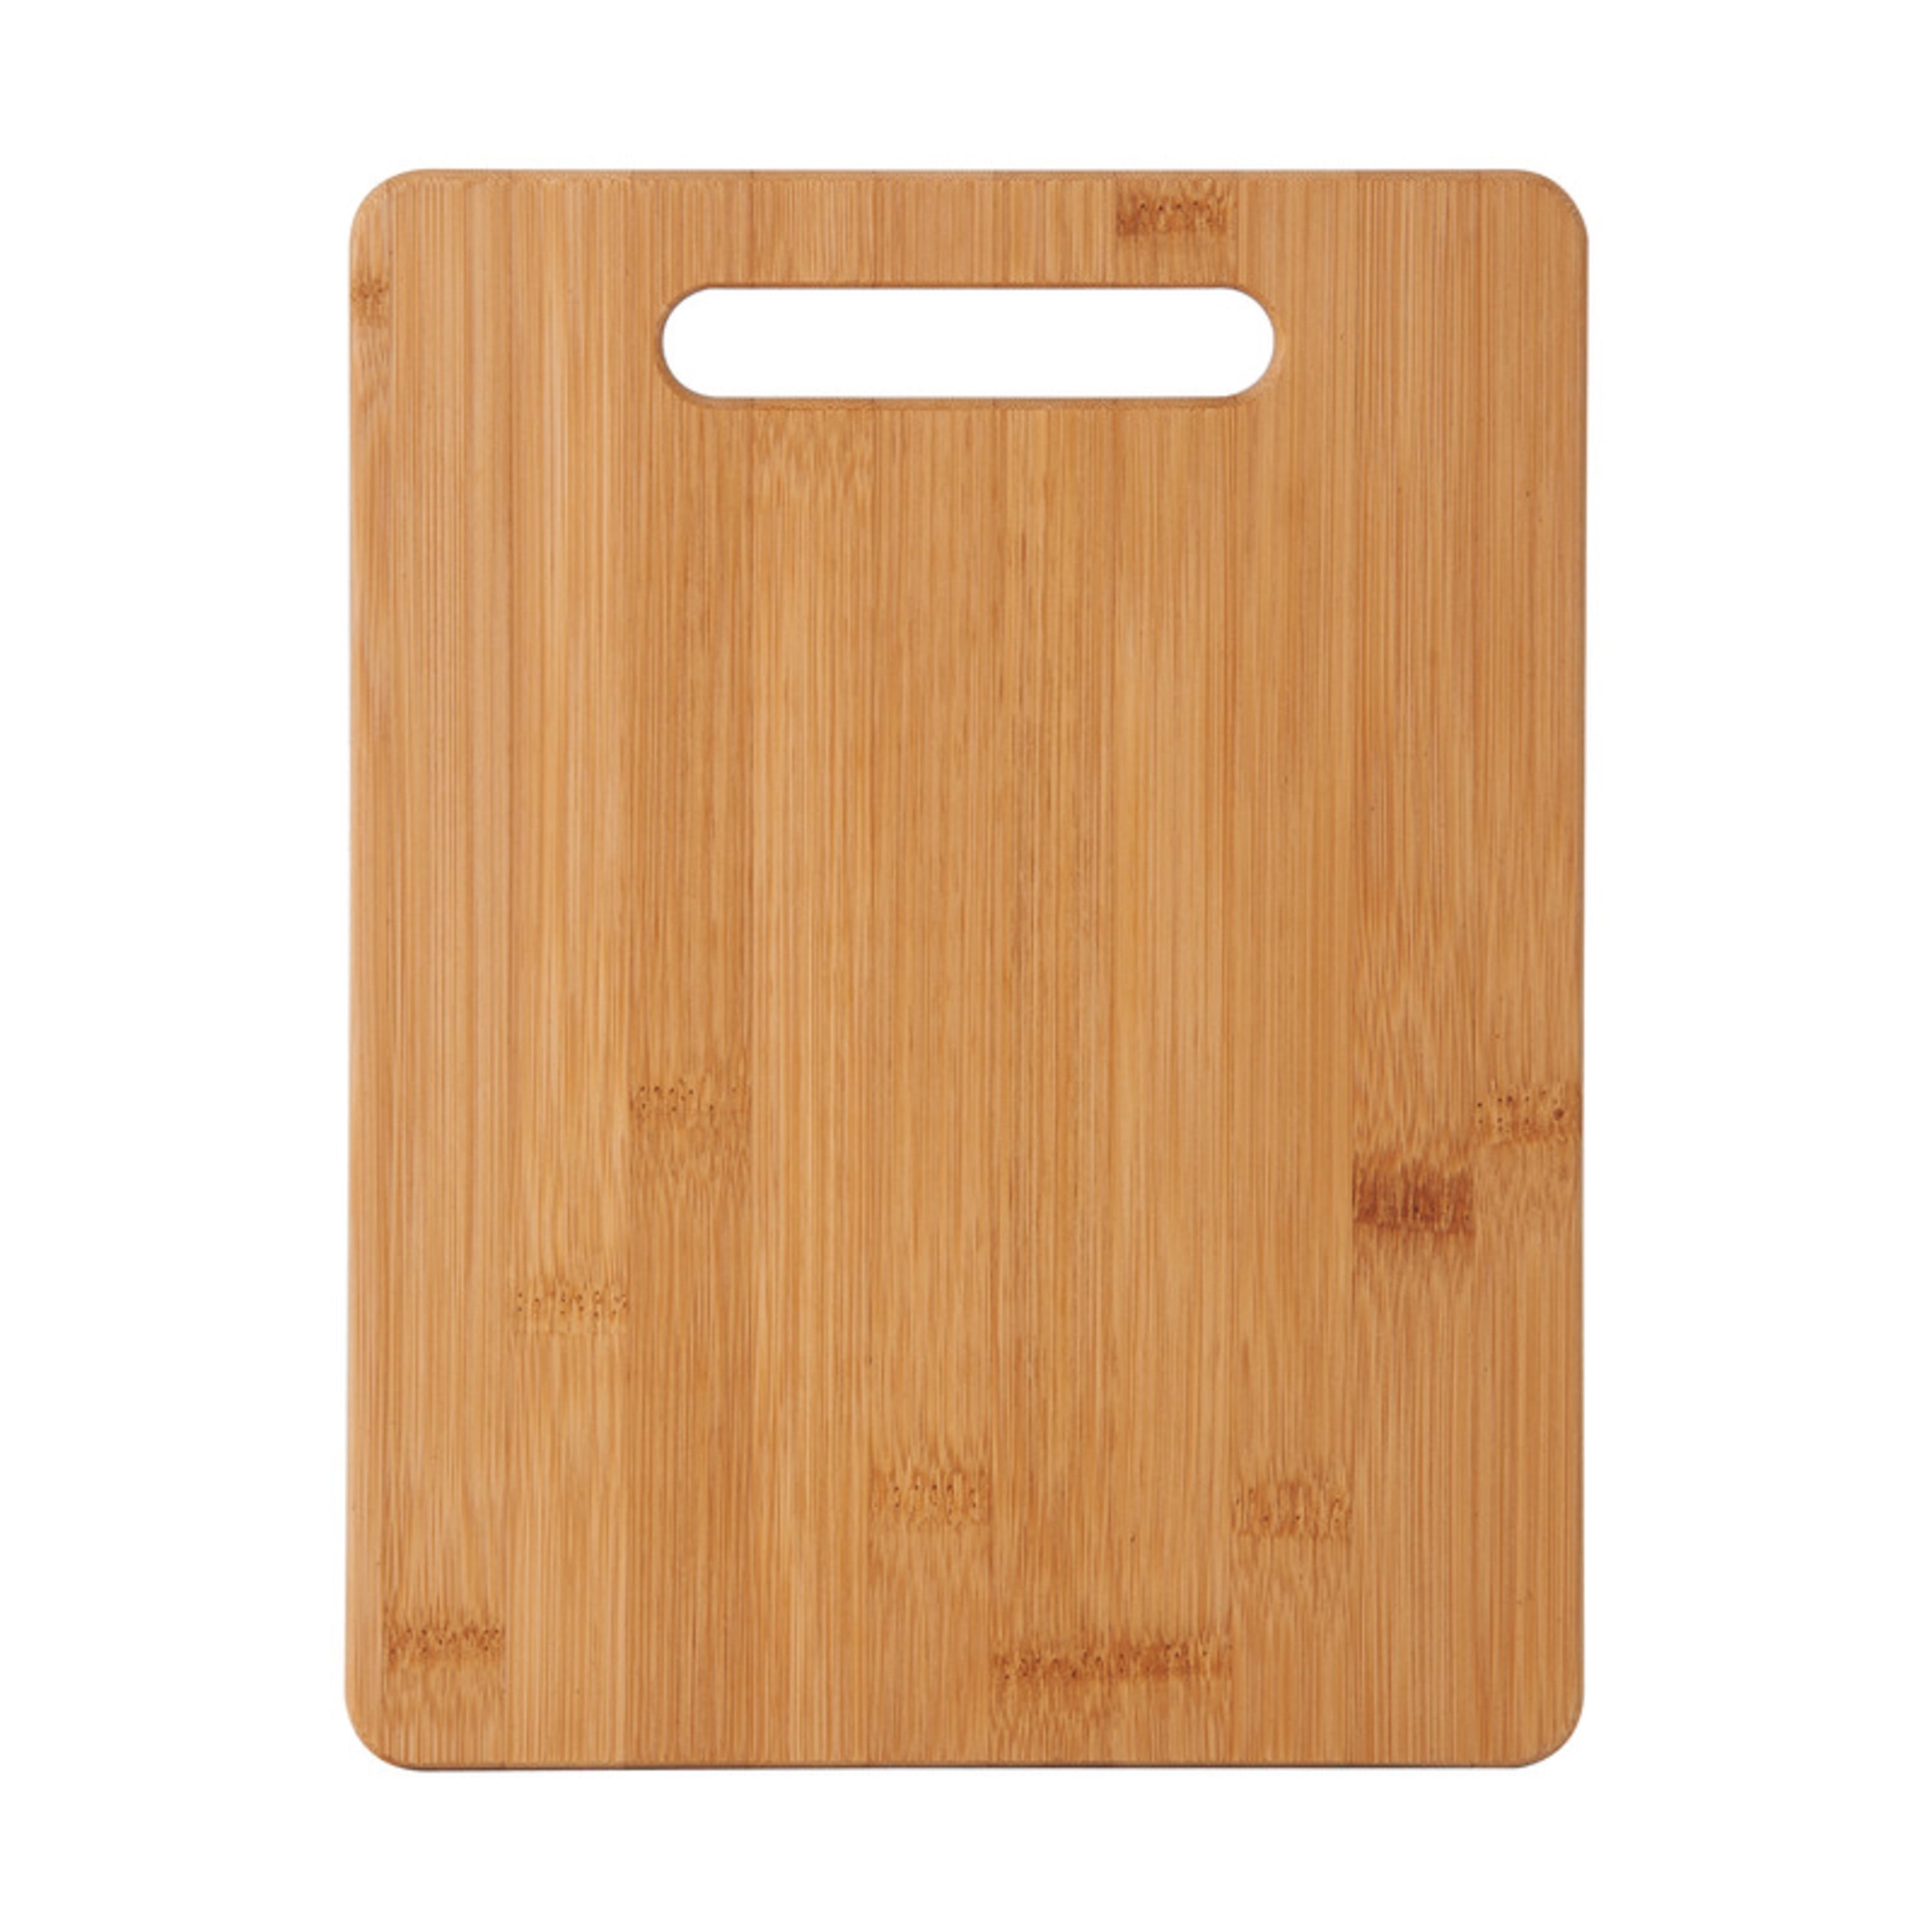 Farberware 5190597 3-Piece Bamboo Cutting Board Set Assorted Sizes